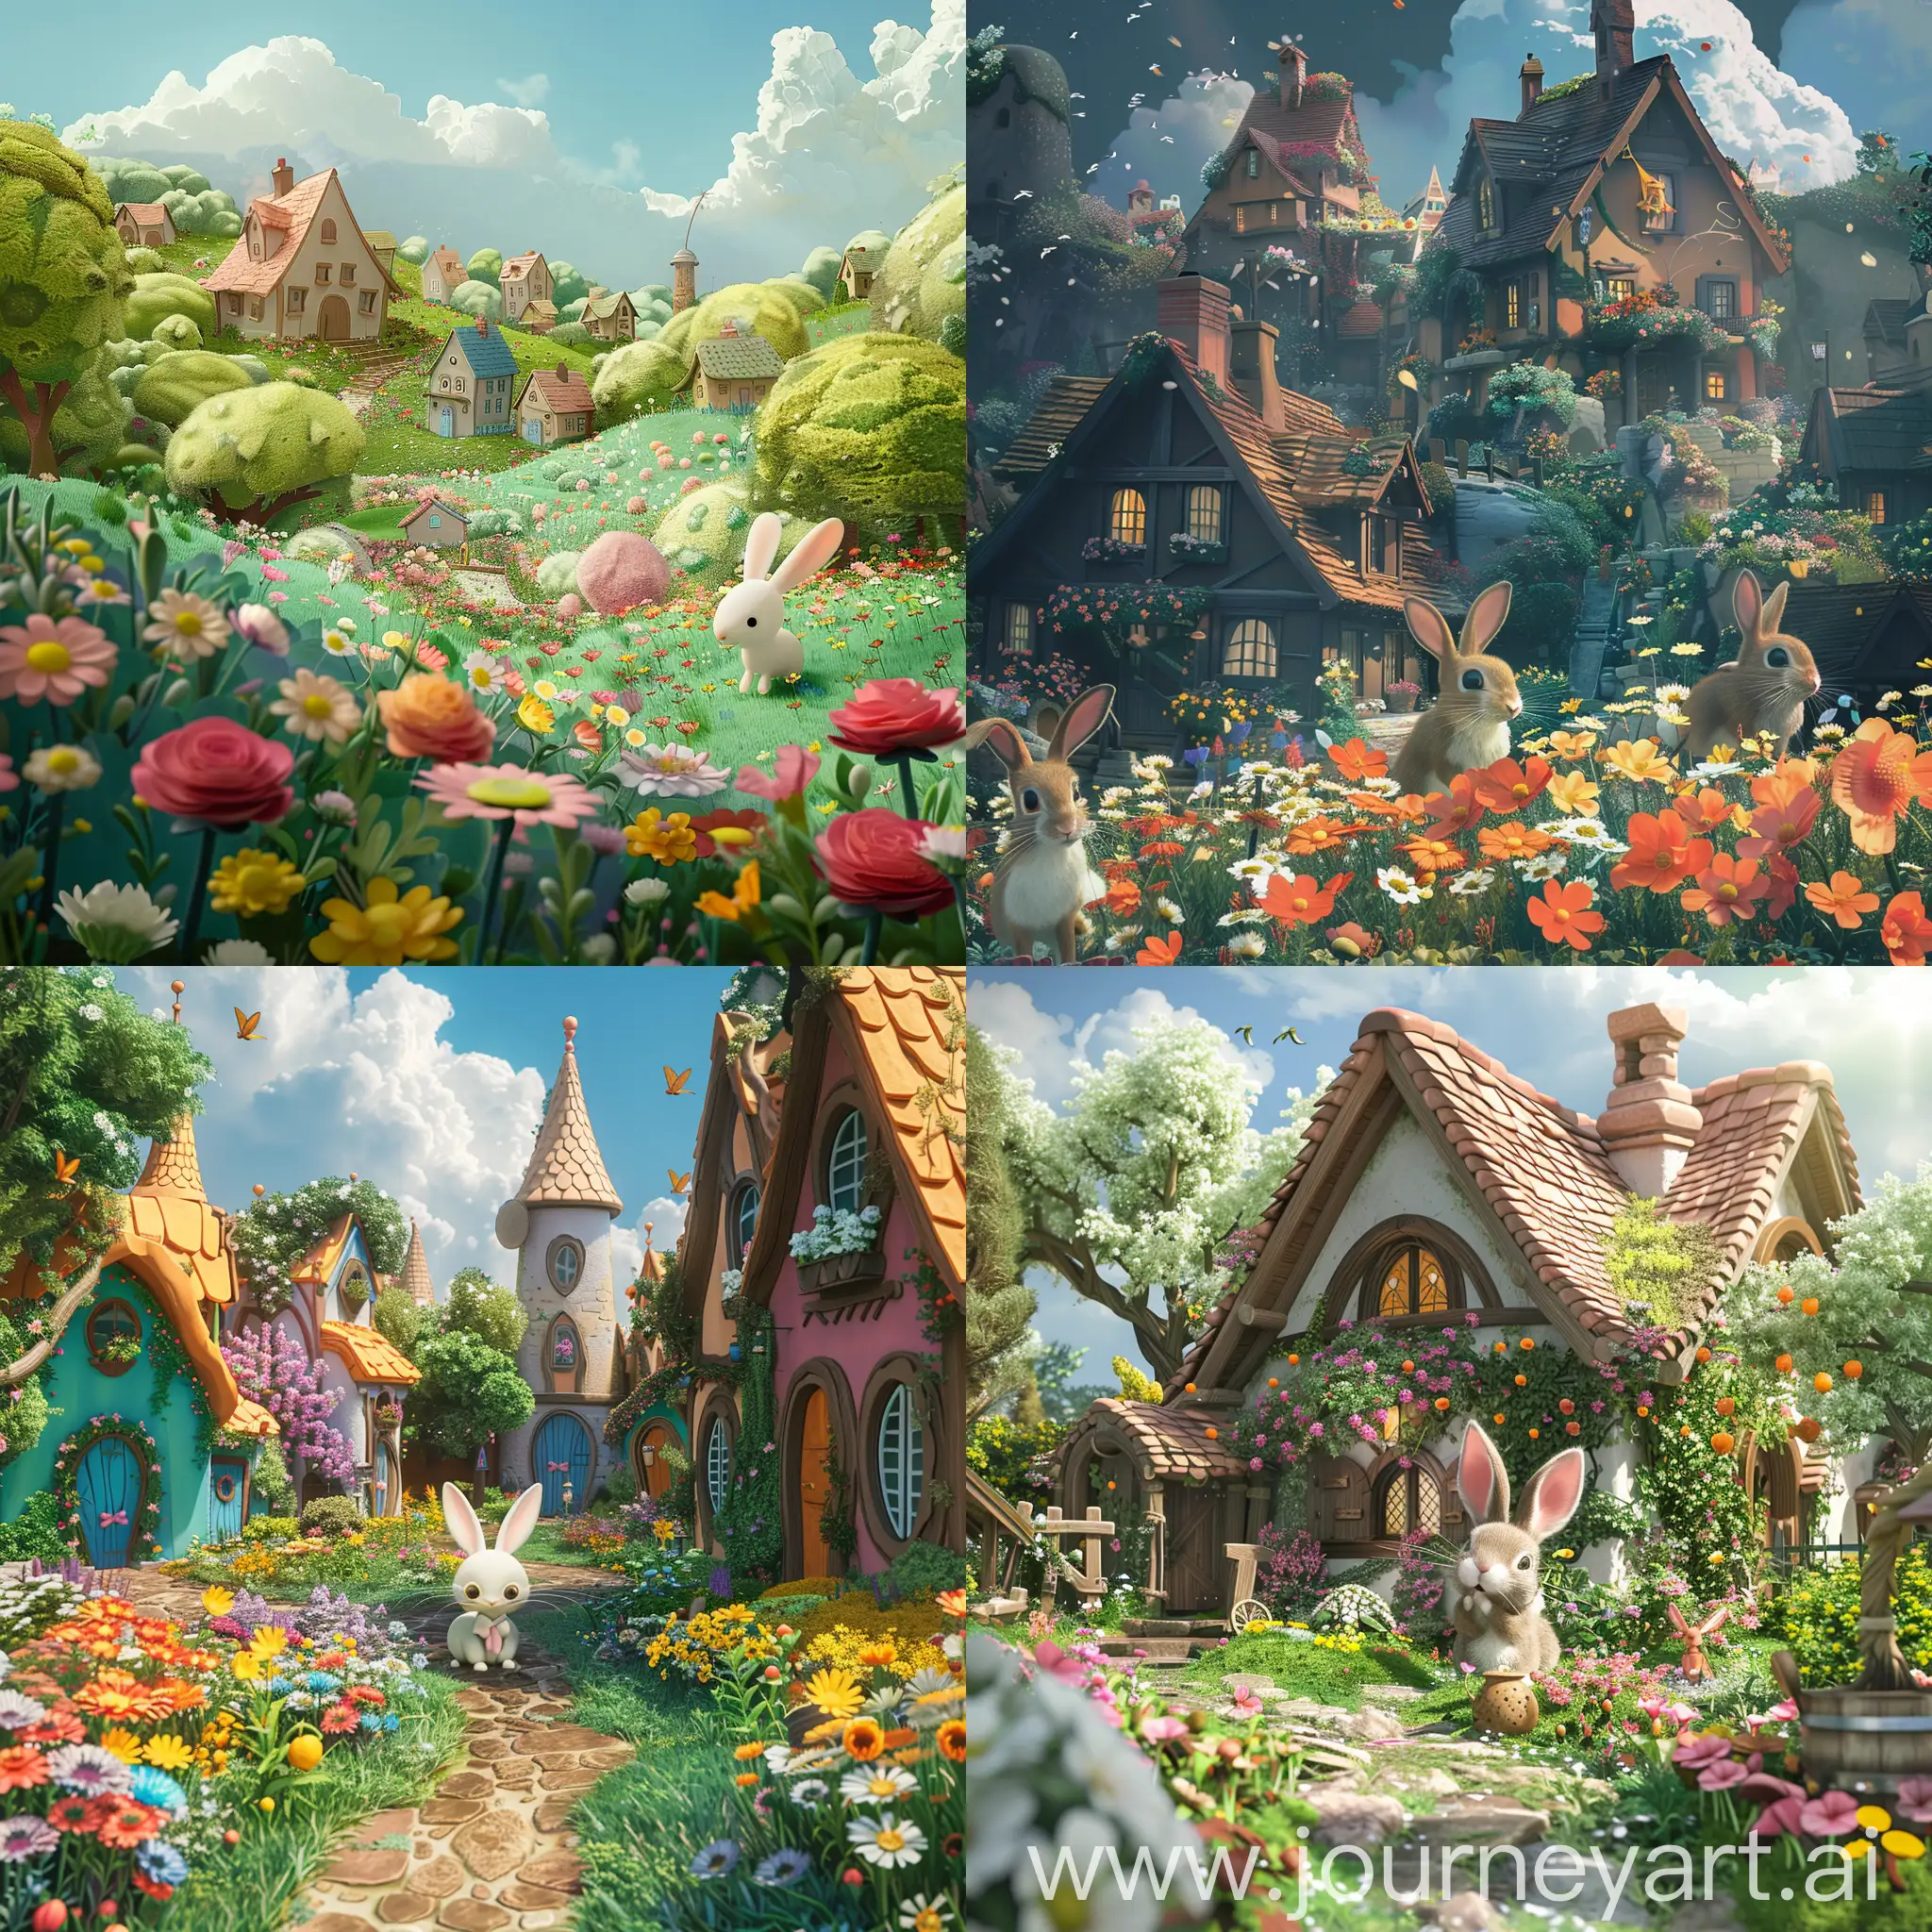 Whimsical-Rabbit-Flower-Village-Animation